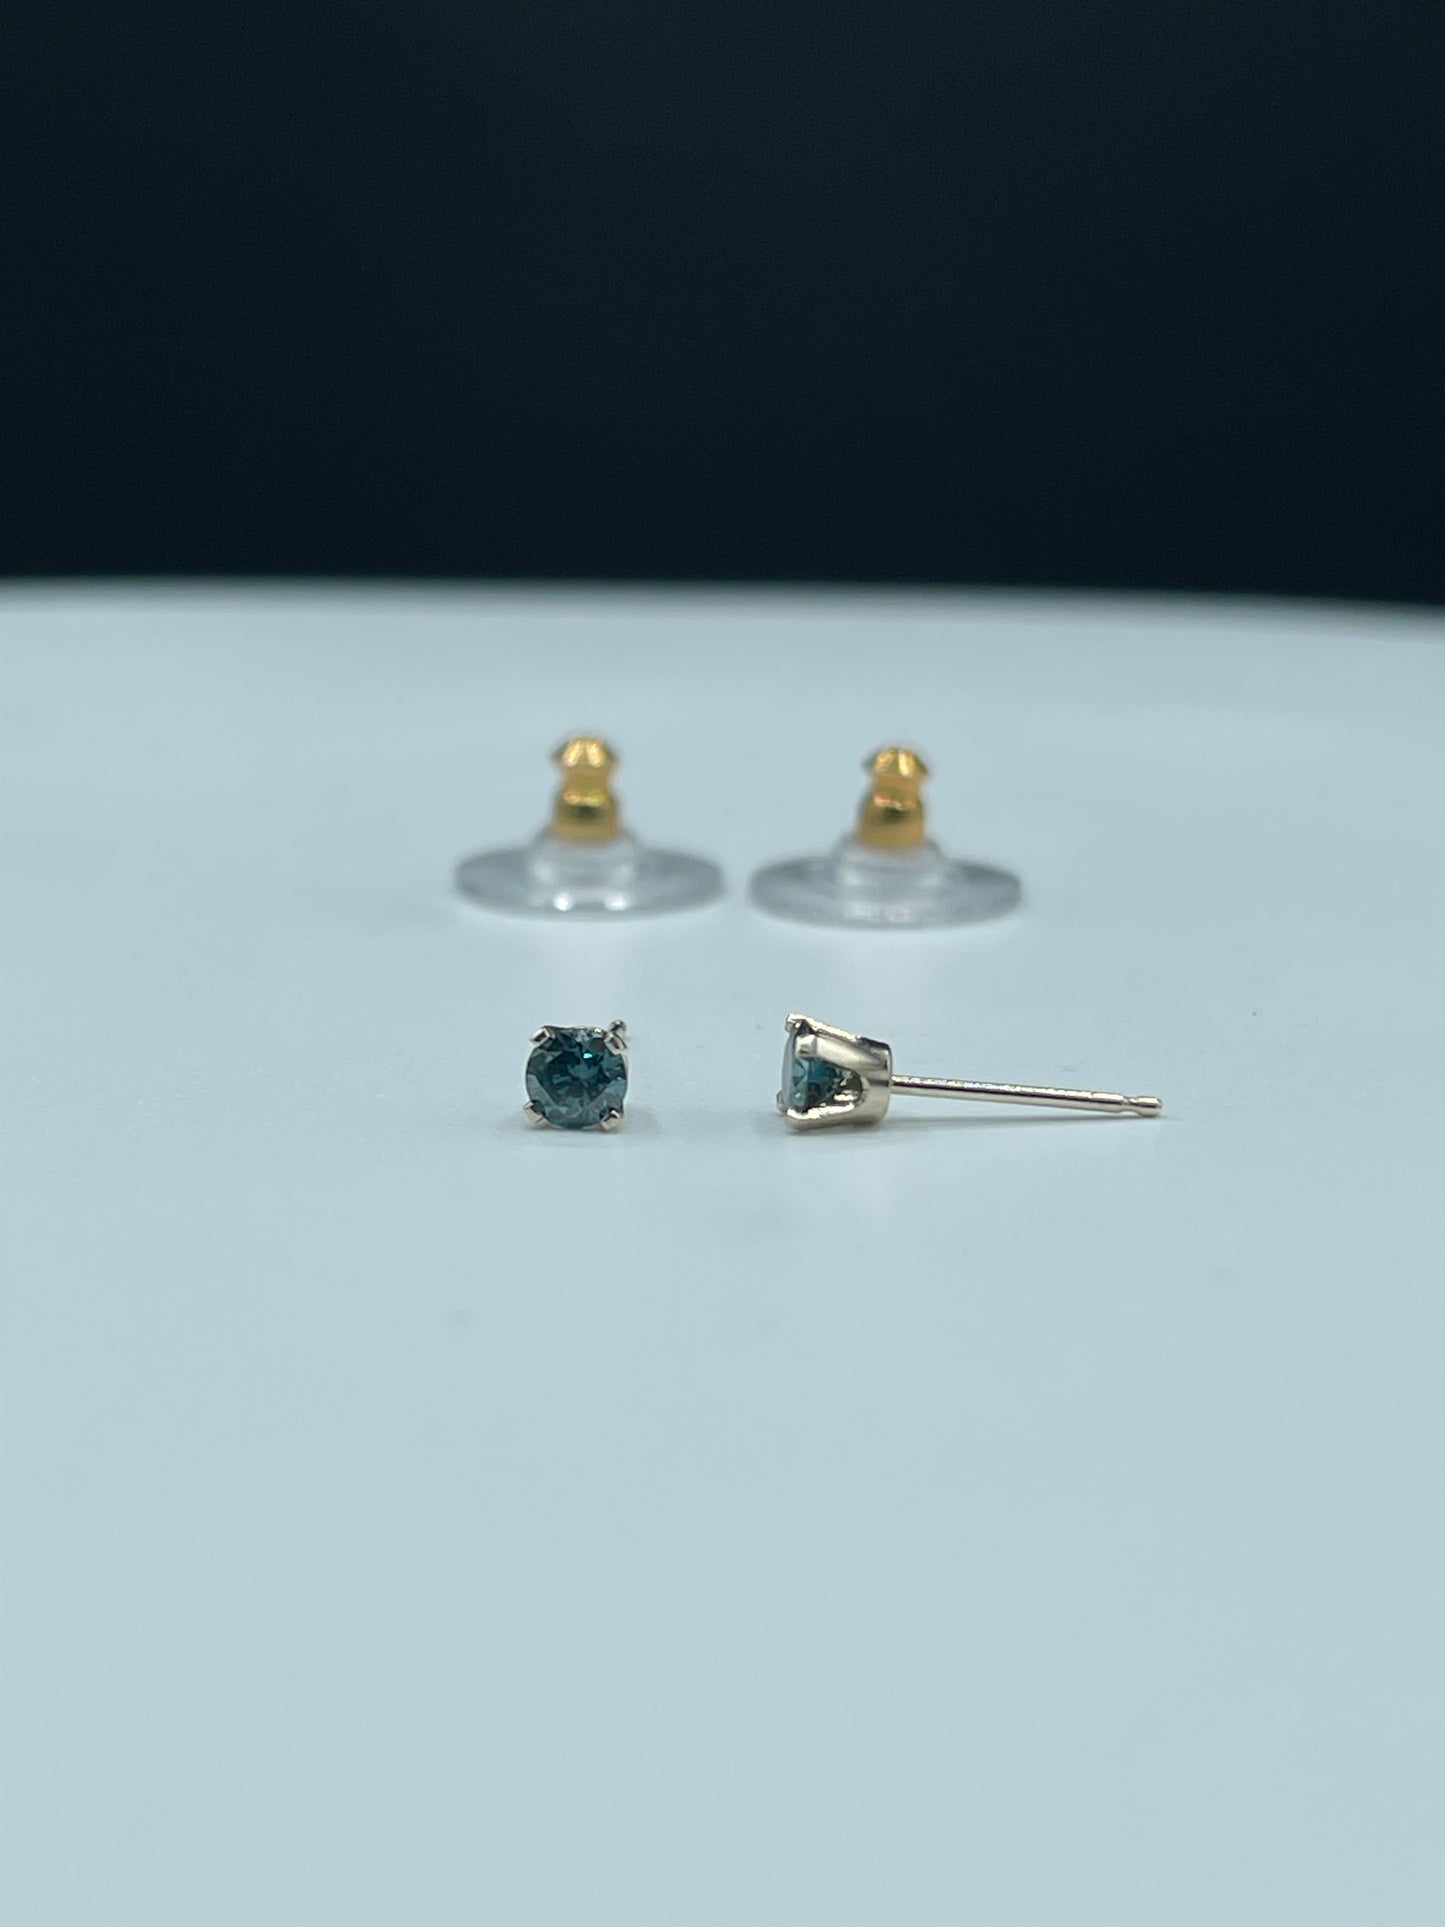 0.32 Carat Natural Blue Diamond 14k White Gold Stud Earrings